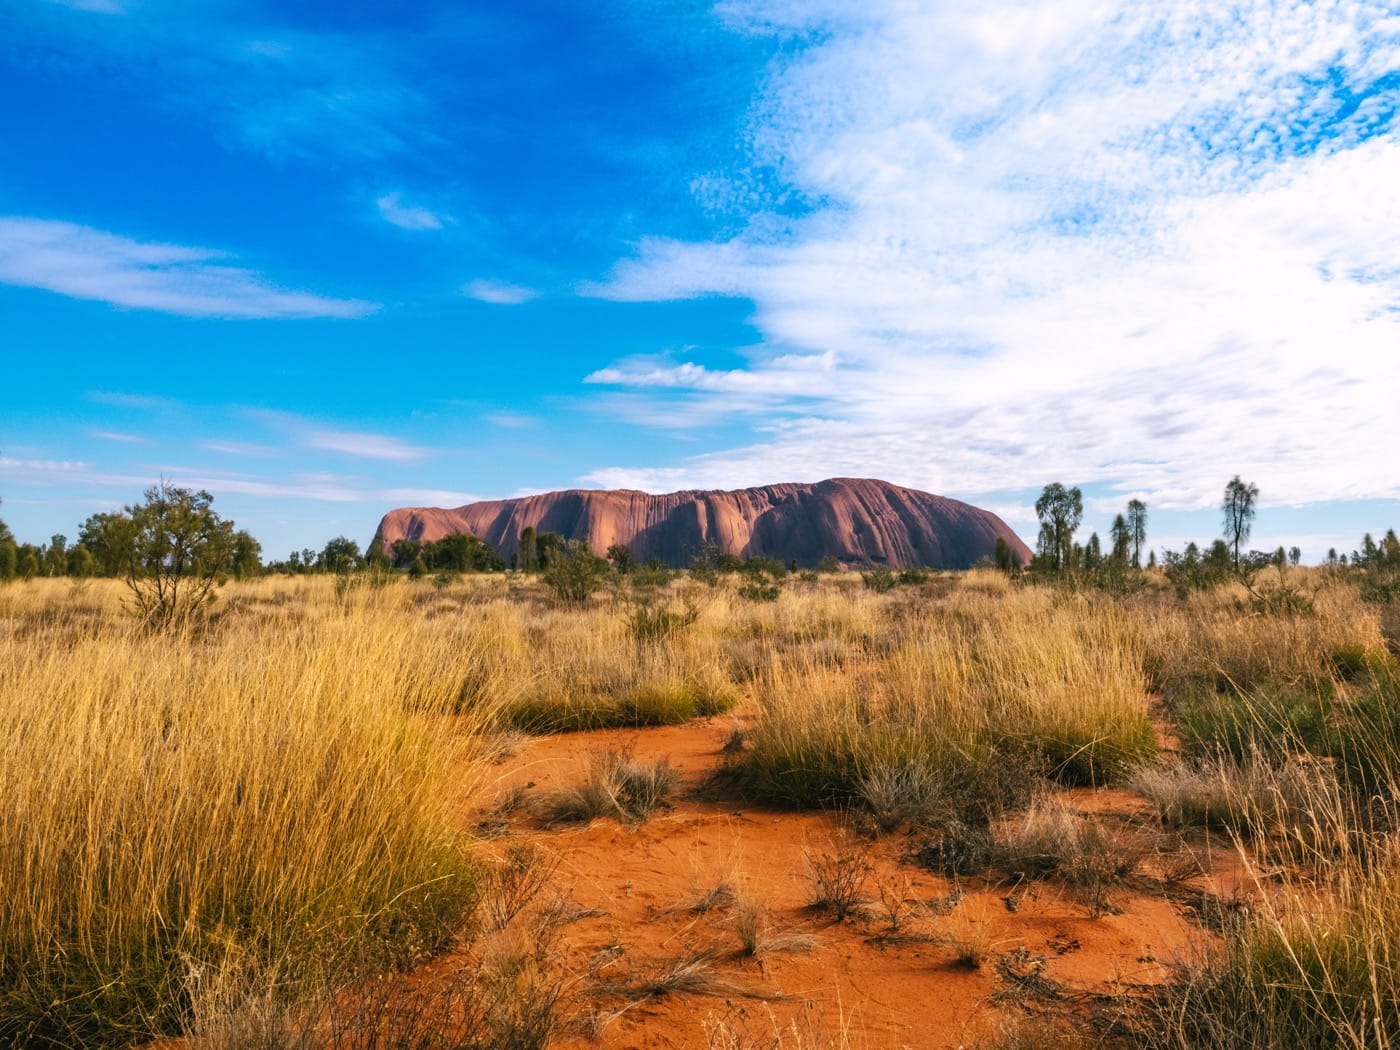 NT Australia - Spending the morning at Uluru